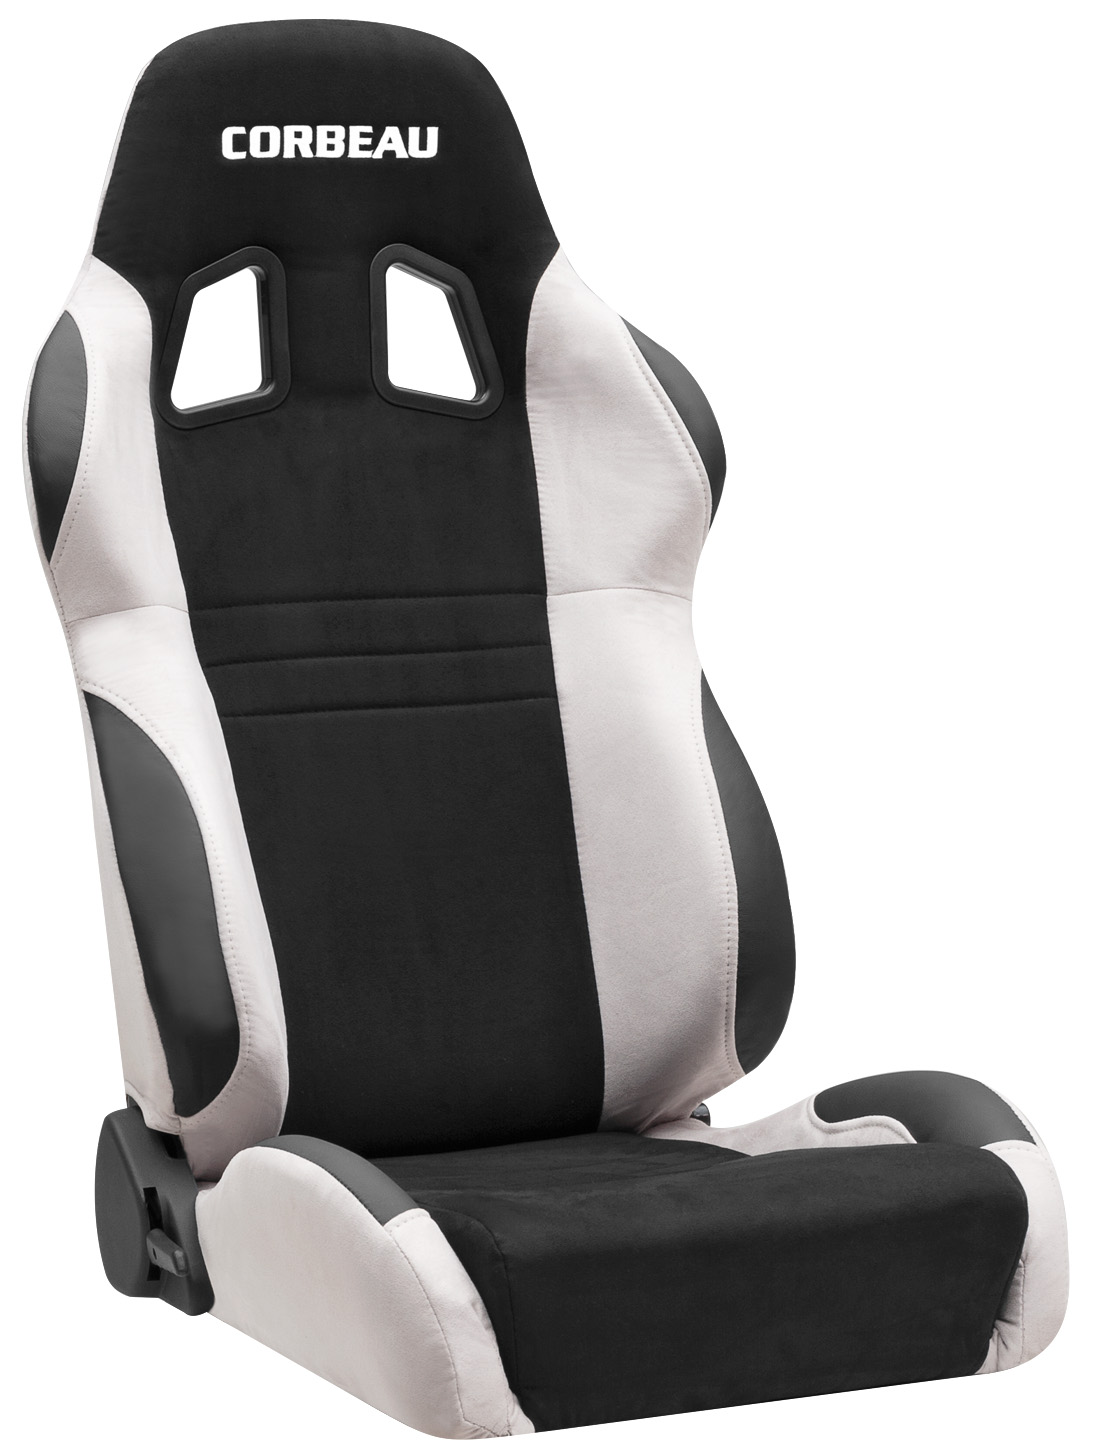 Corbeau A4 Racing Seat, Grey / Black Microsuede, S60099PR